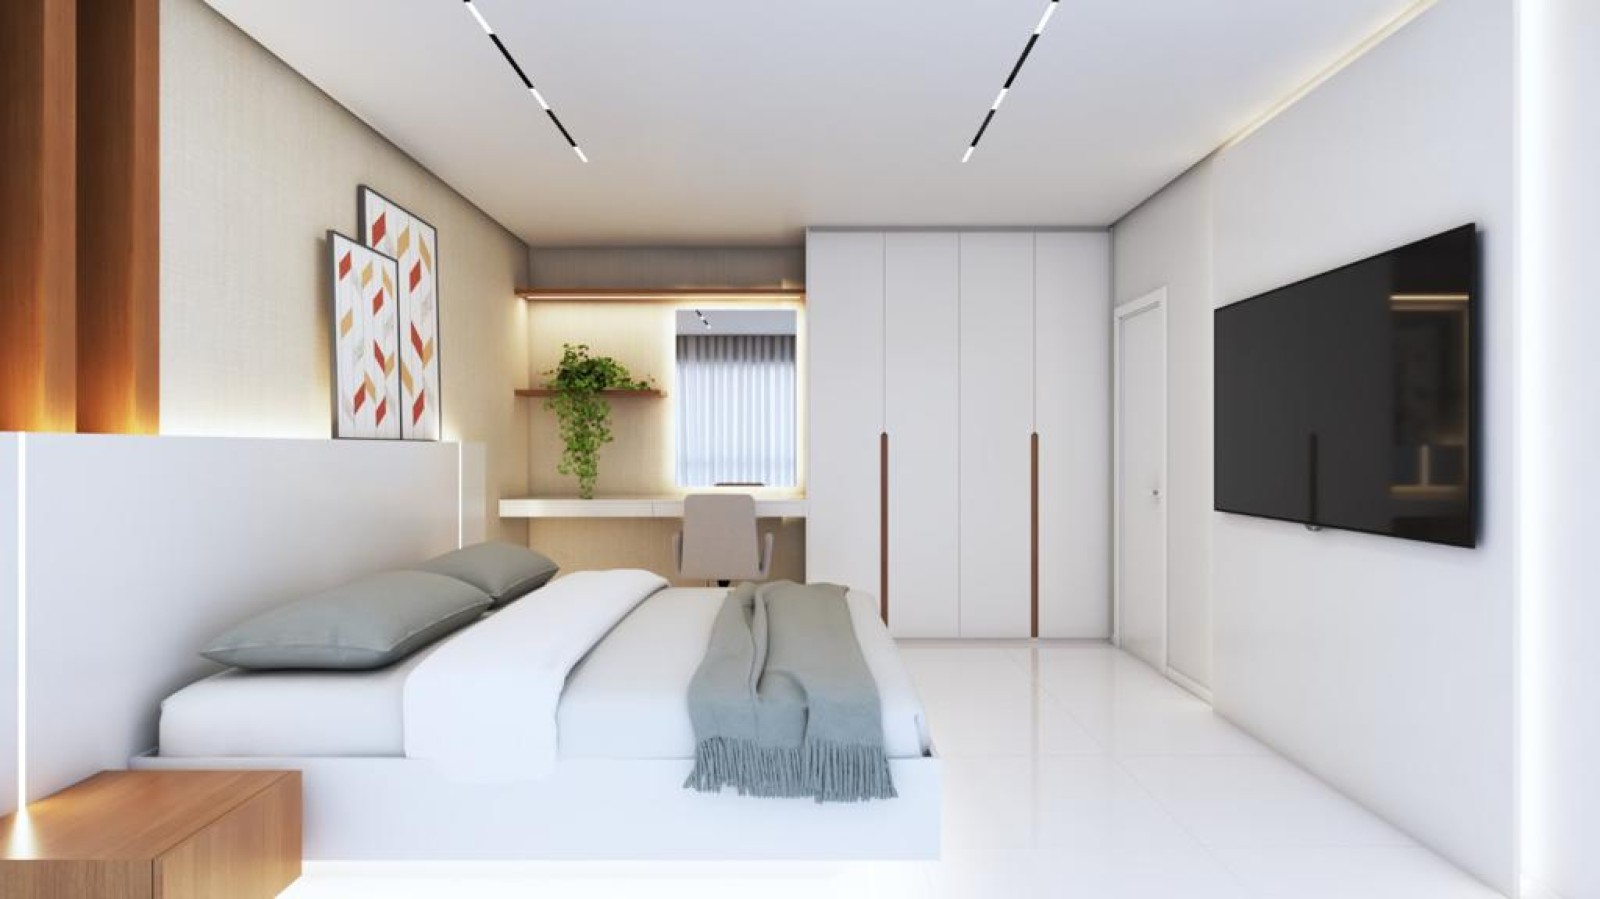 3 Bedroom Luxury House, for sale, in Portimão, Algarve_224738